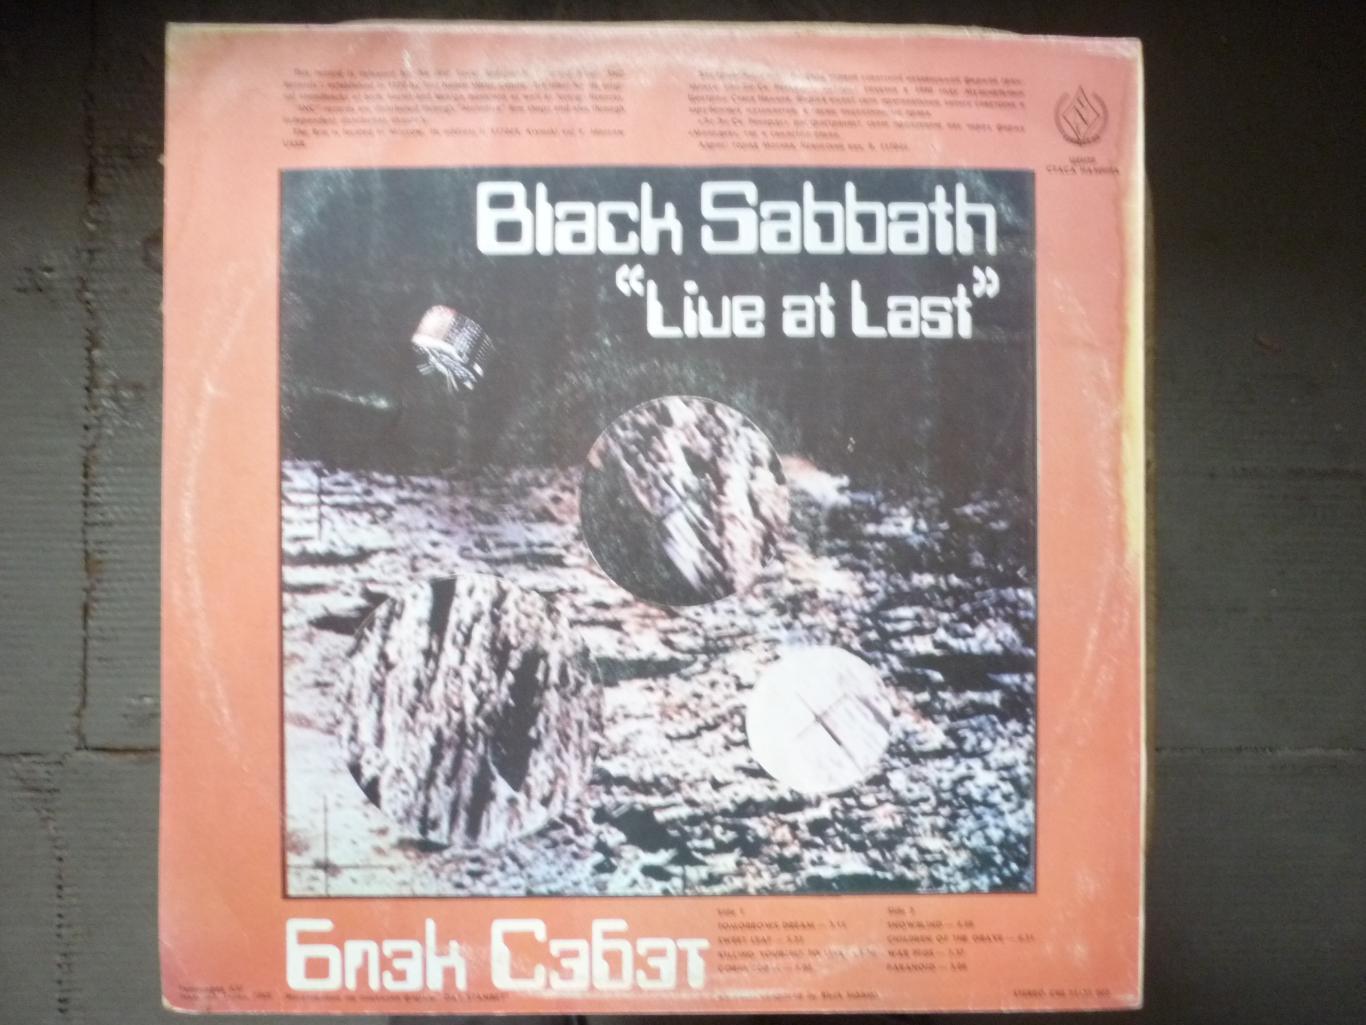 Пластинка-винил Блэк Саббат (Black Sabbath) 1